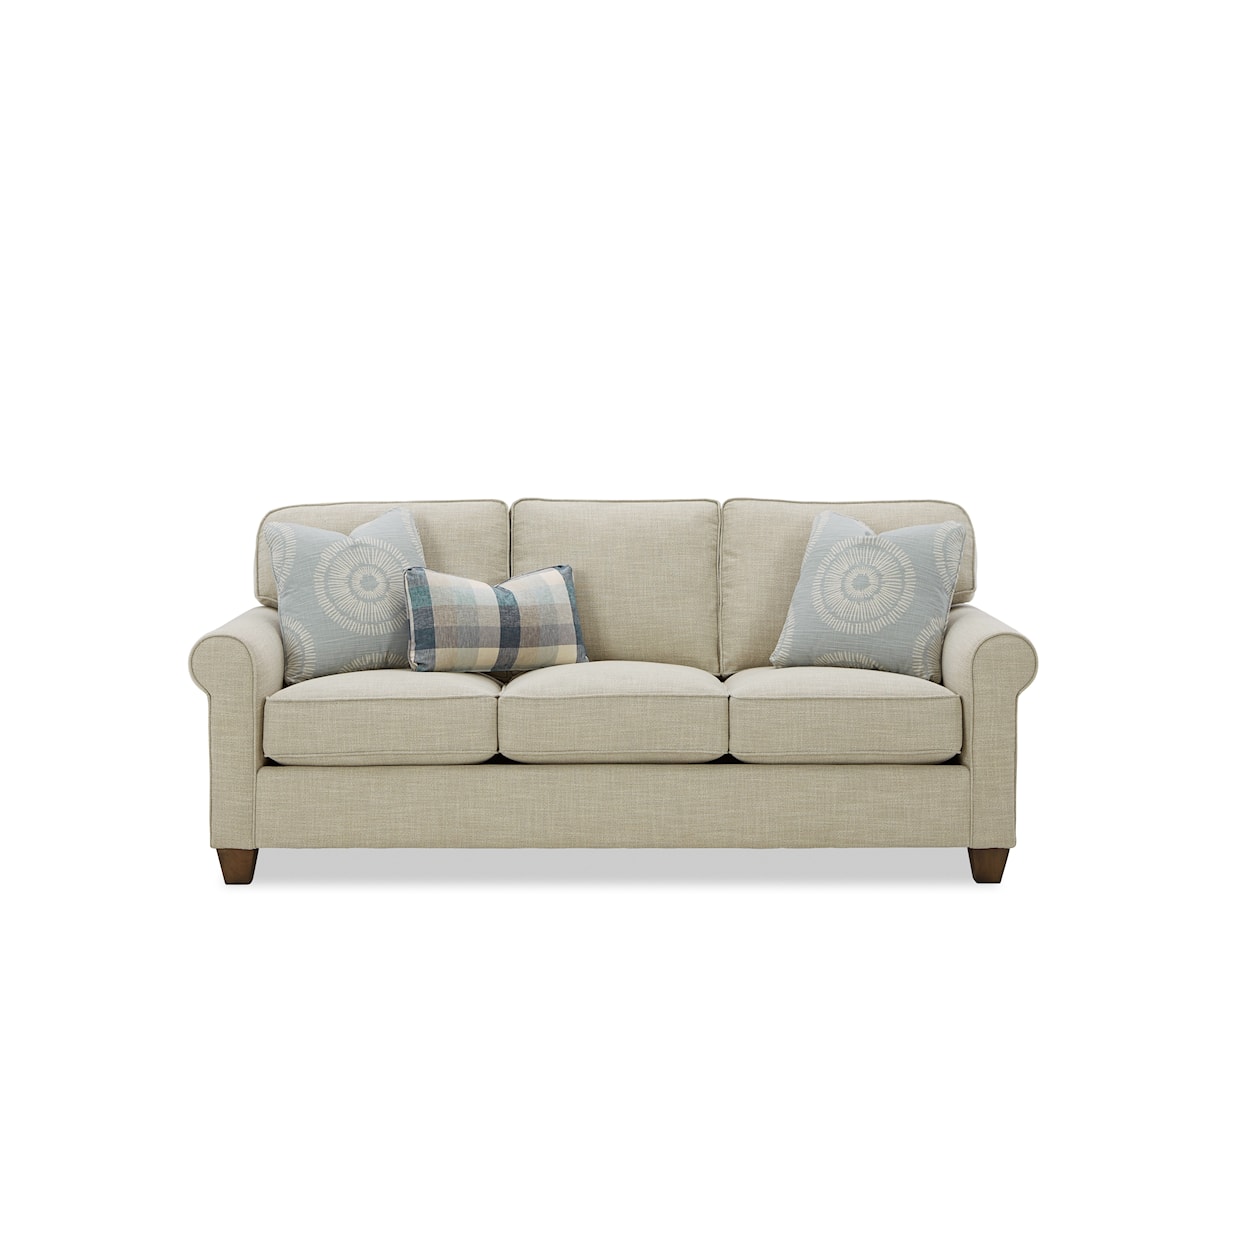 Craftmaster 717450 3-Seat Sofa